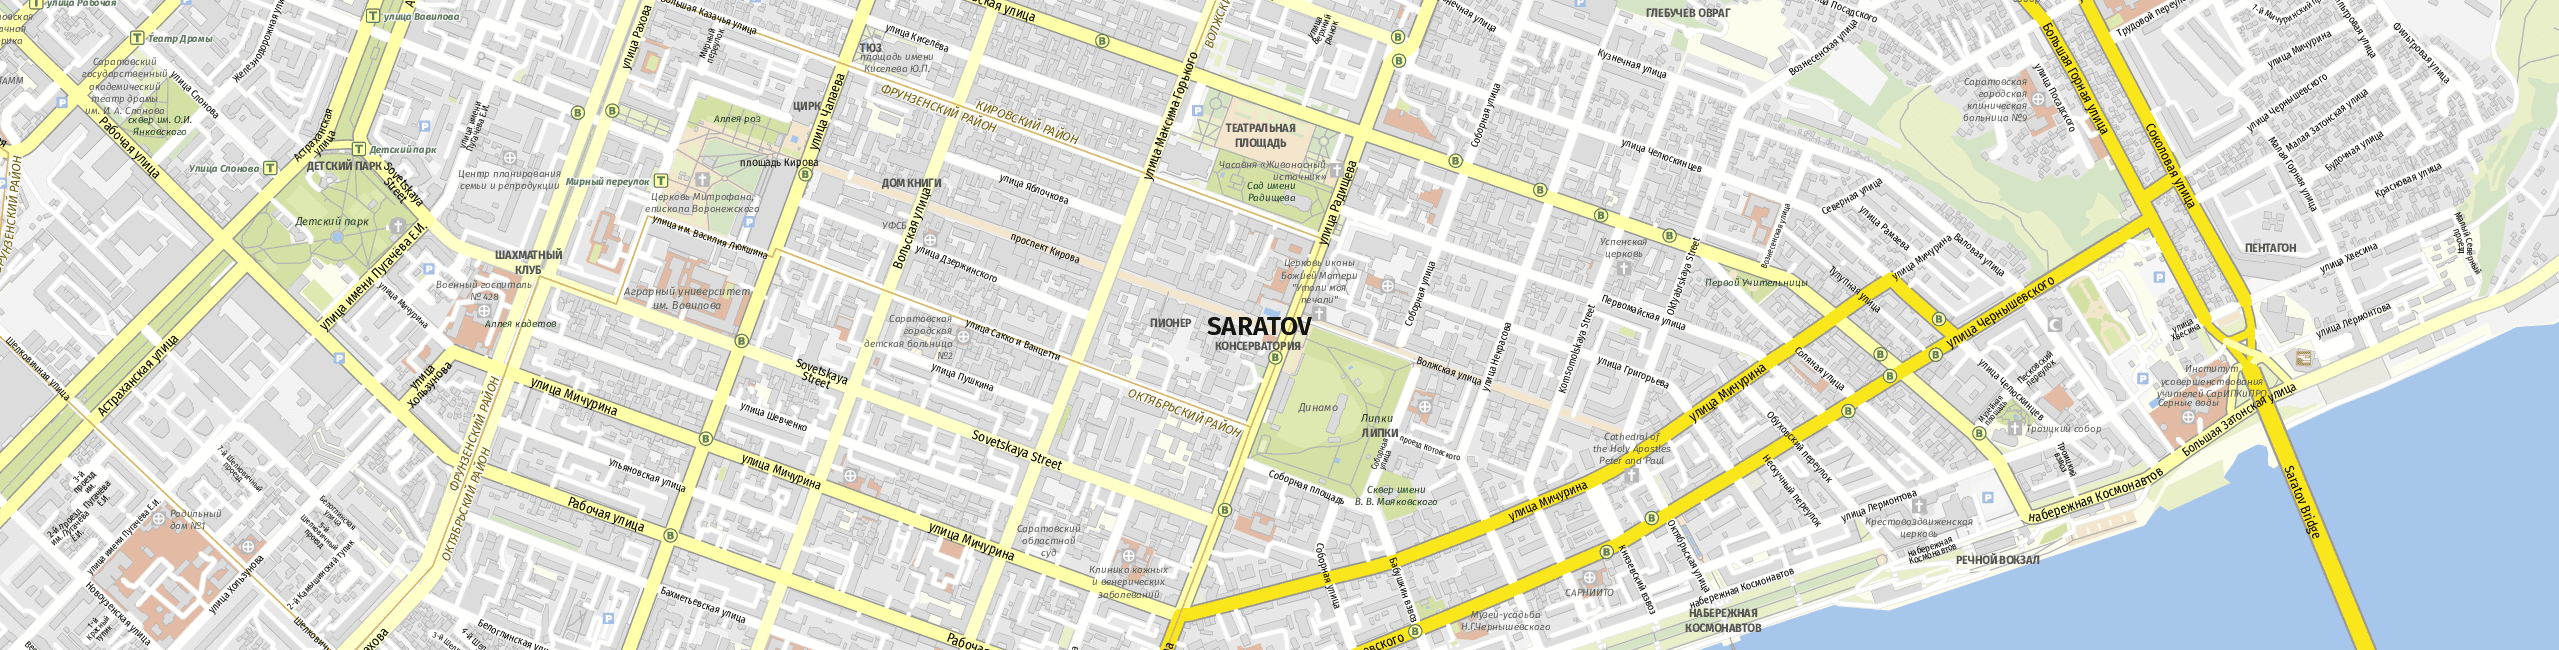 Stadtplan Saratov zum Downloaden.